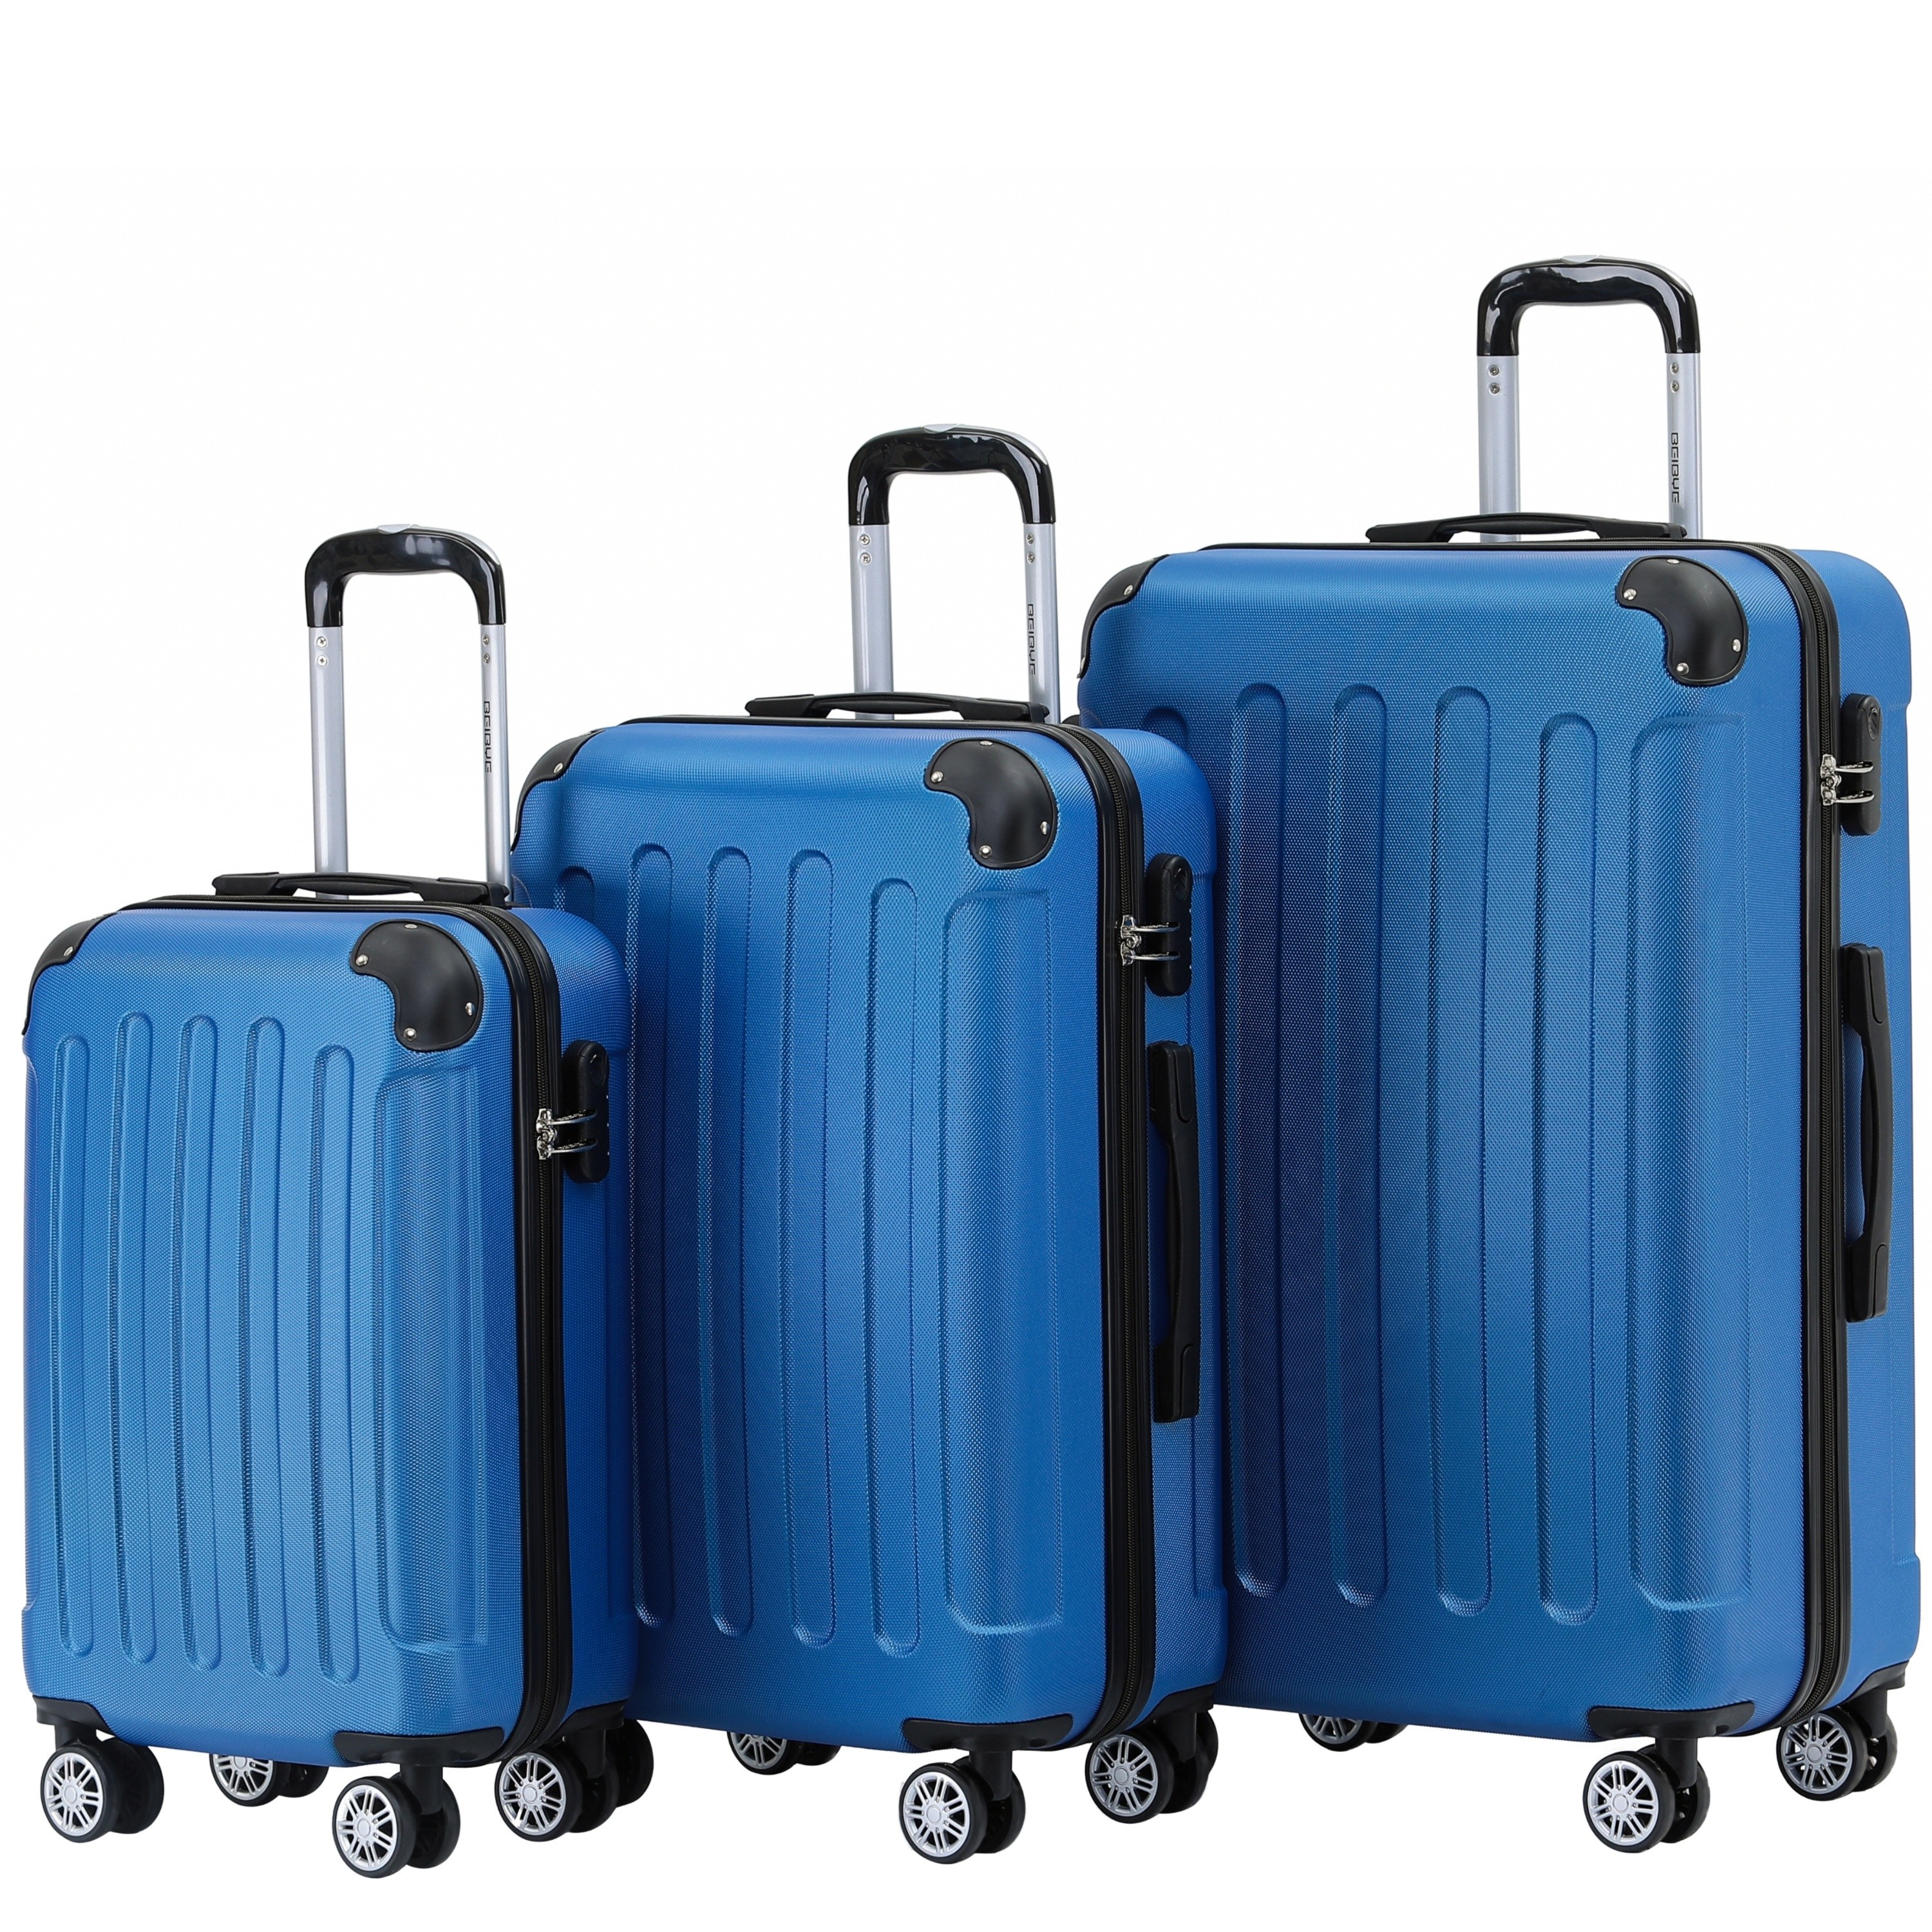 Juego de maletas de 4 piezas, Juego de maletas de carcasa dura de ABS  Maletas de viaje ligeras con ruedas giratorias Funda de maleta gratis (18  20 24